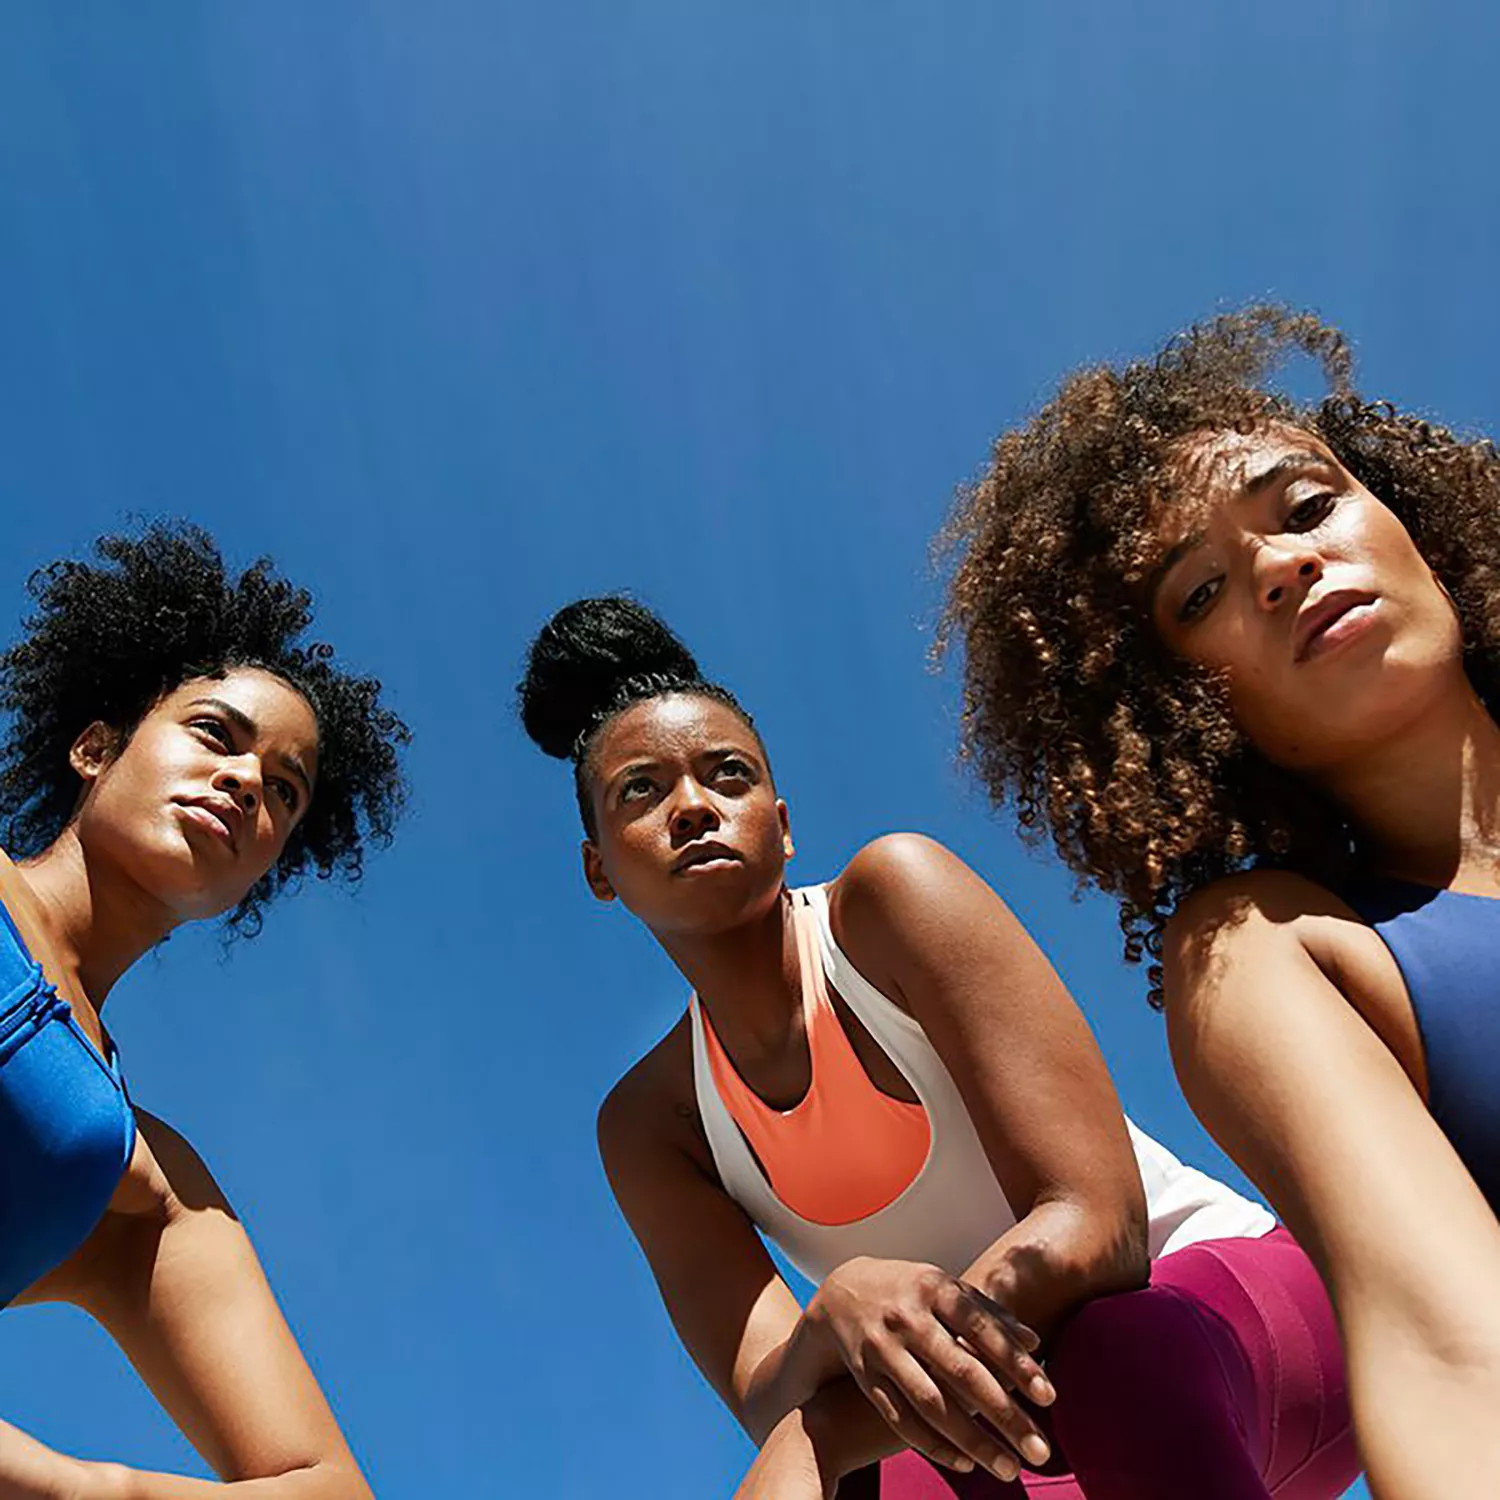 Three black women in athletic attire